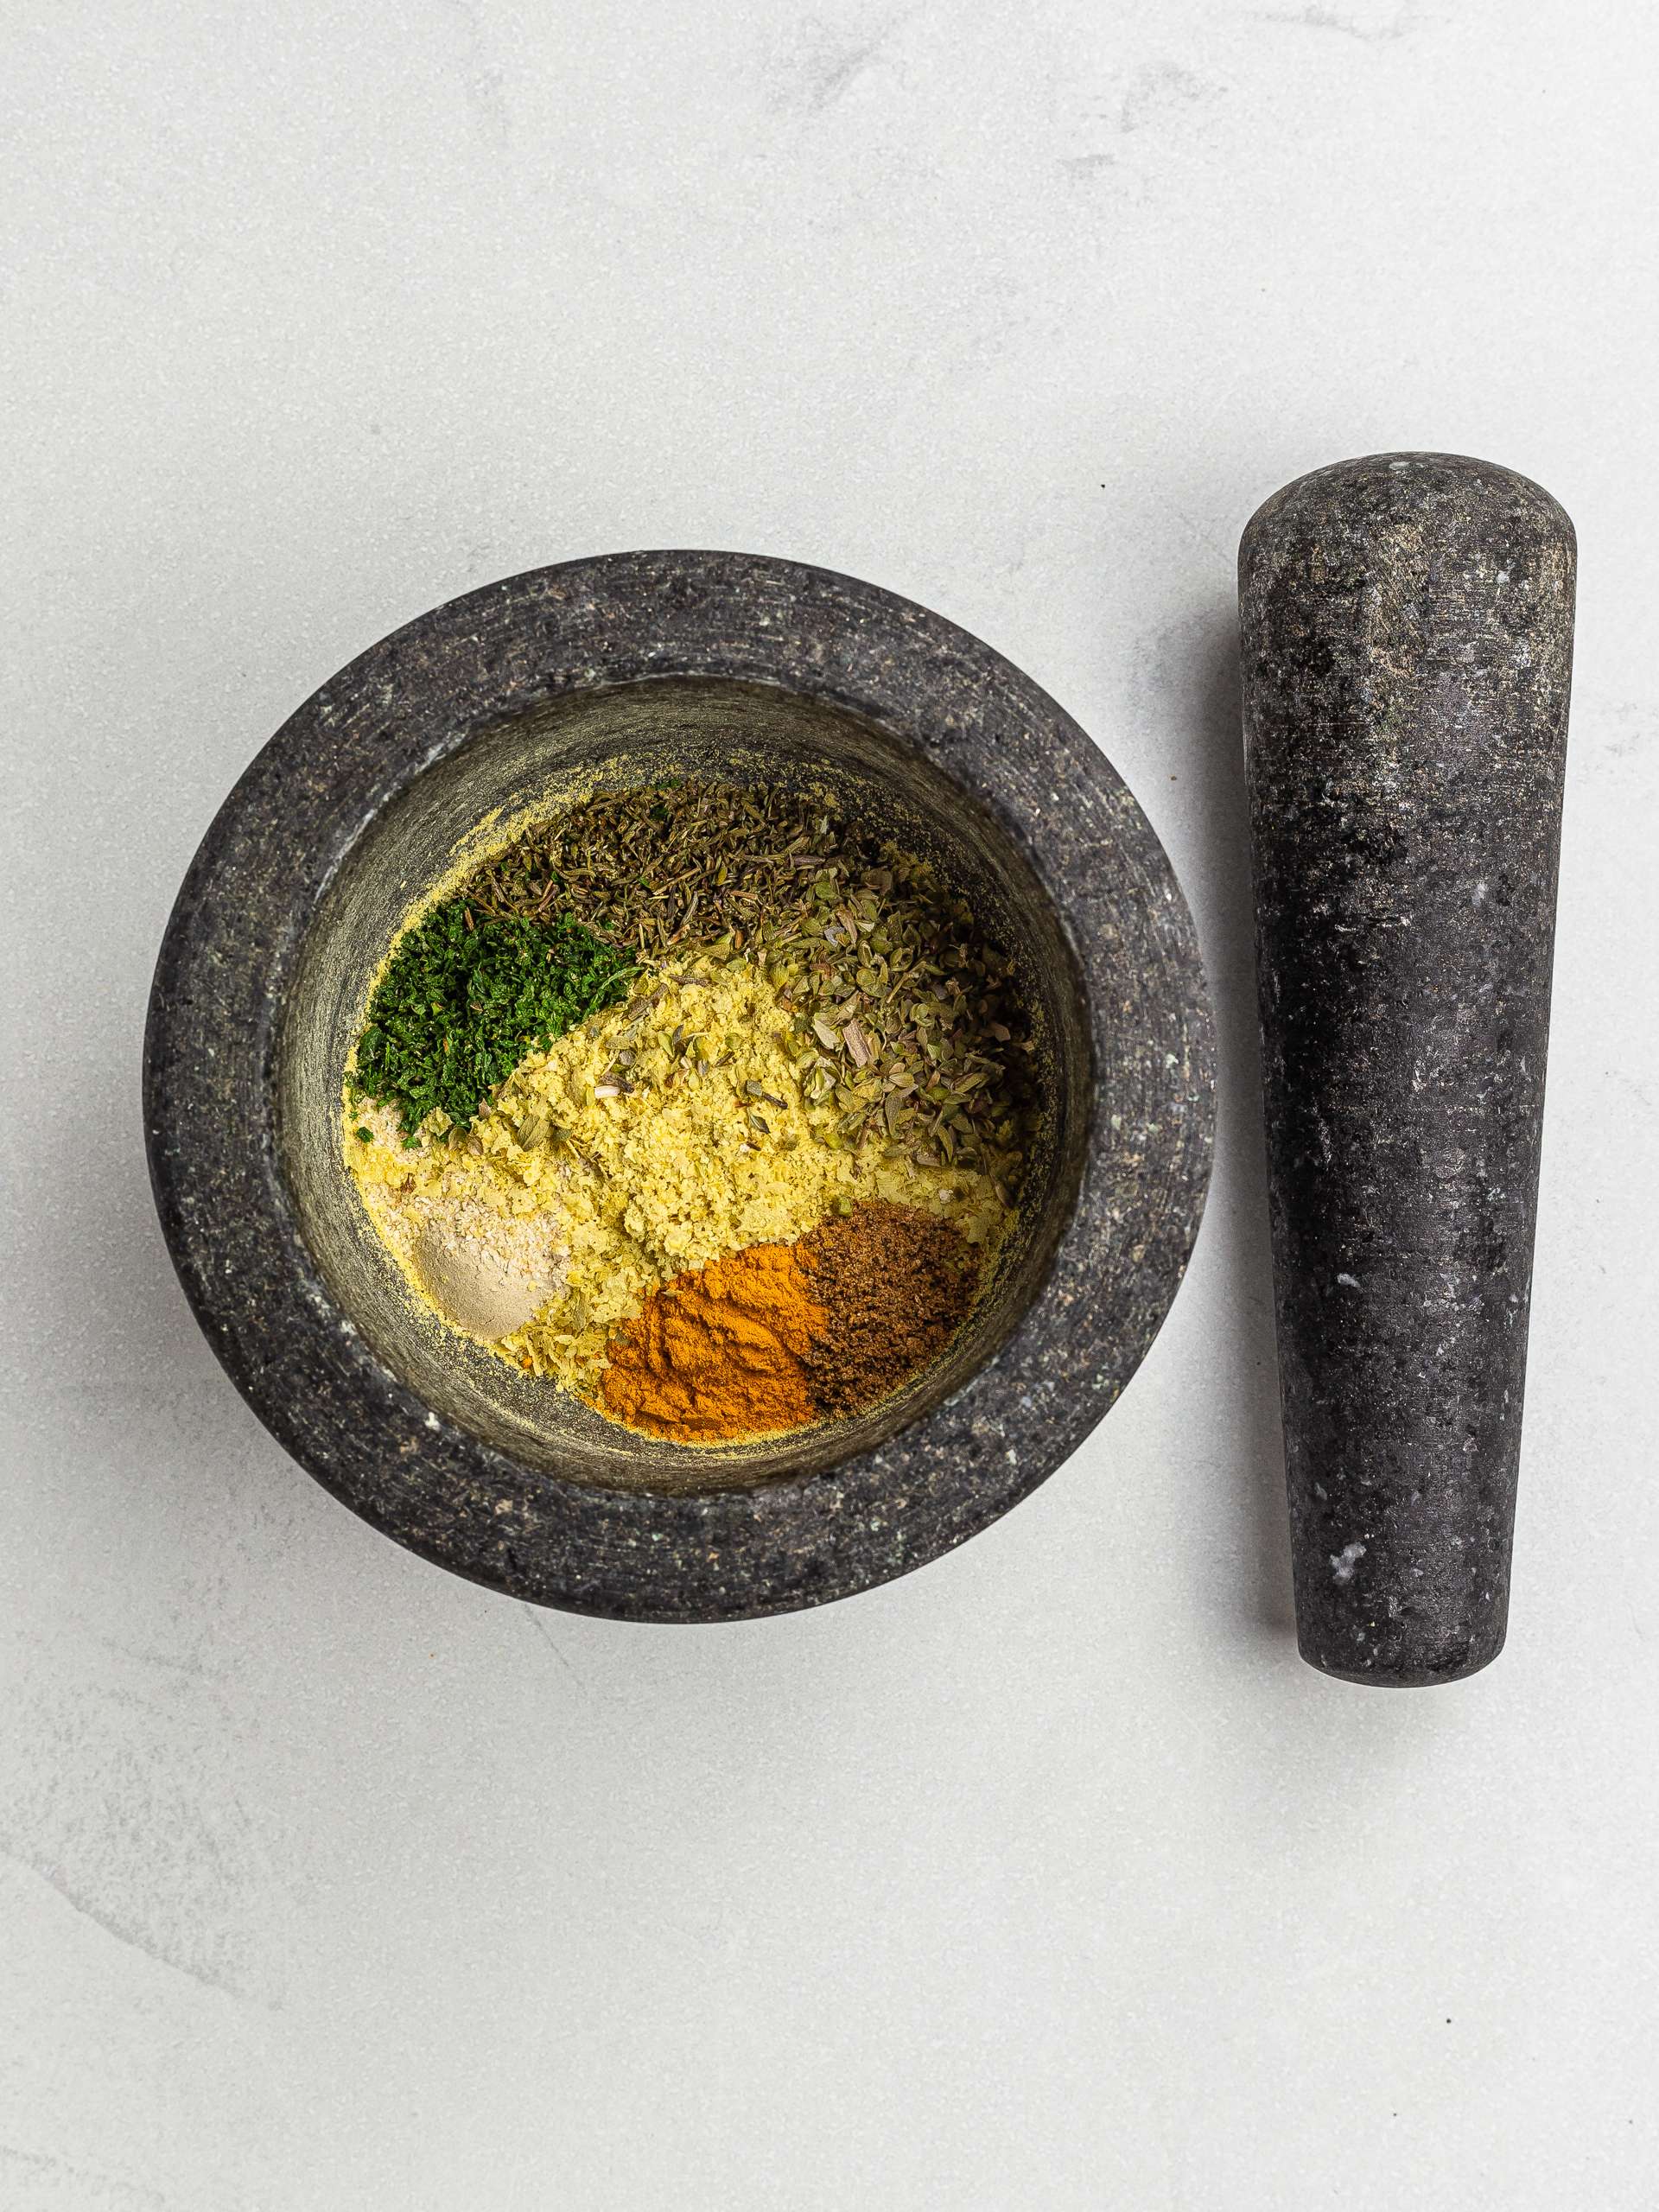 vegan bouillon power ingredients in a mortar